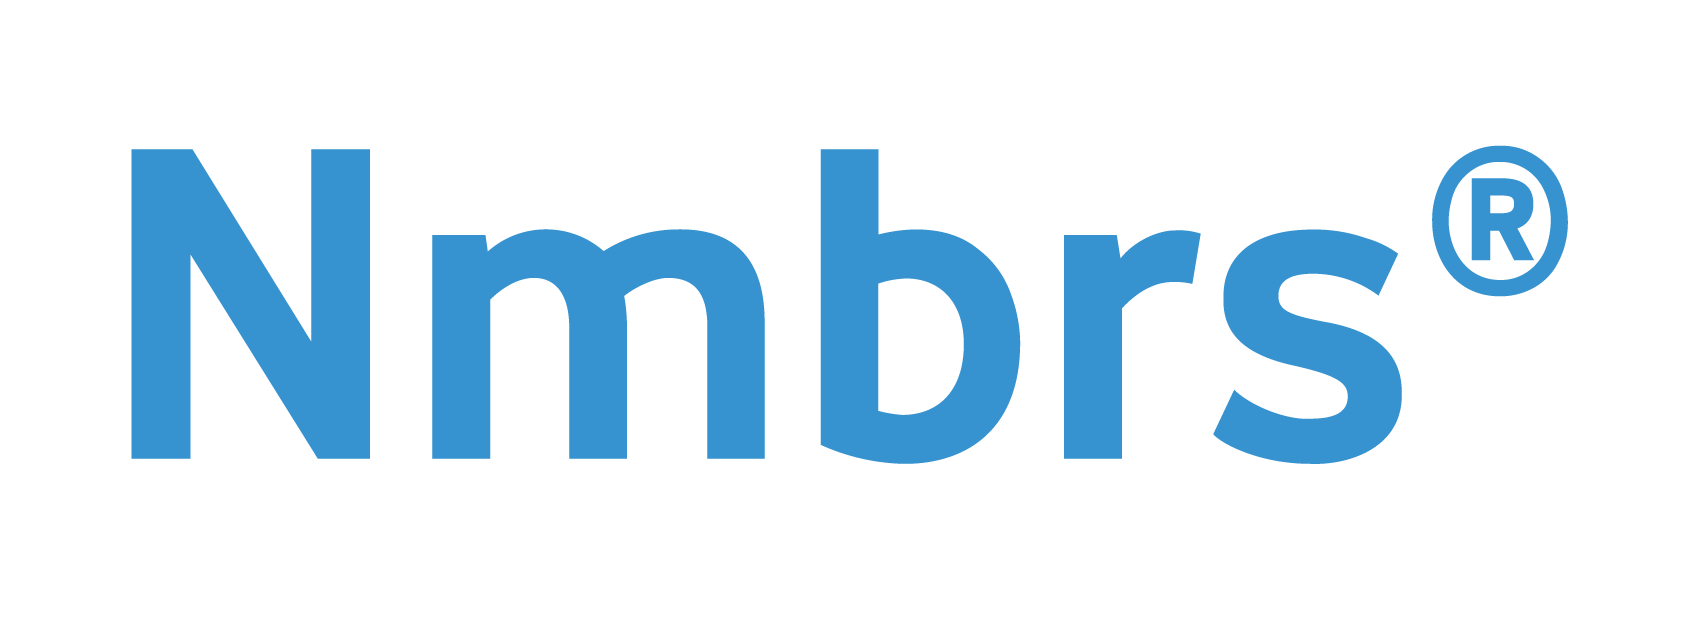 Nmbrs-logo